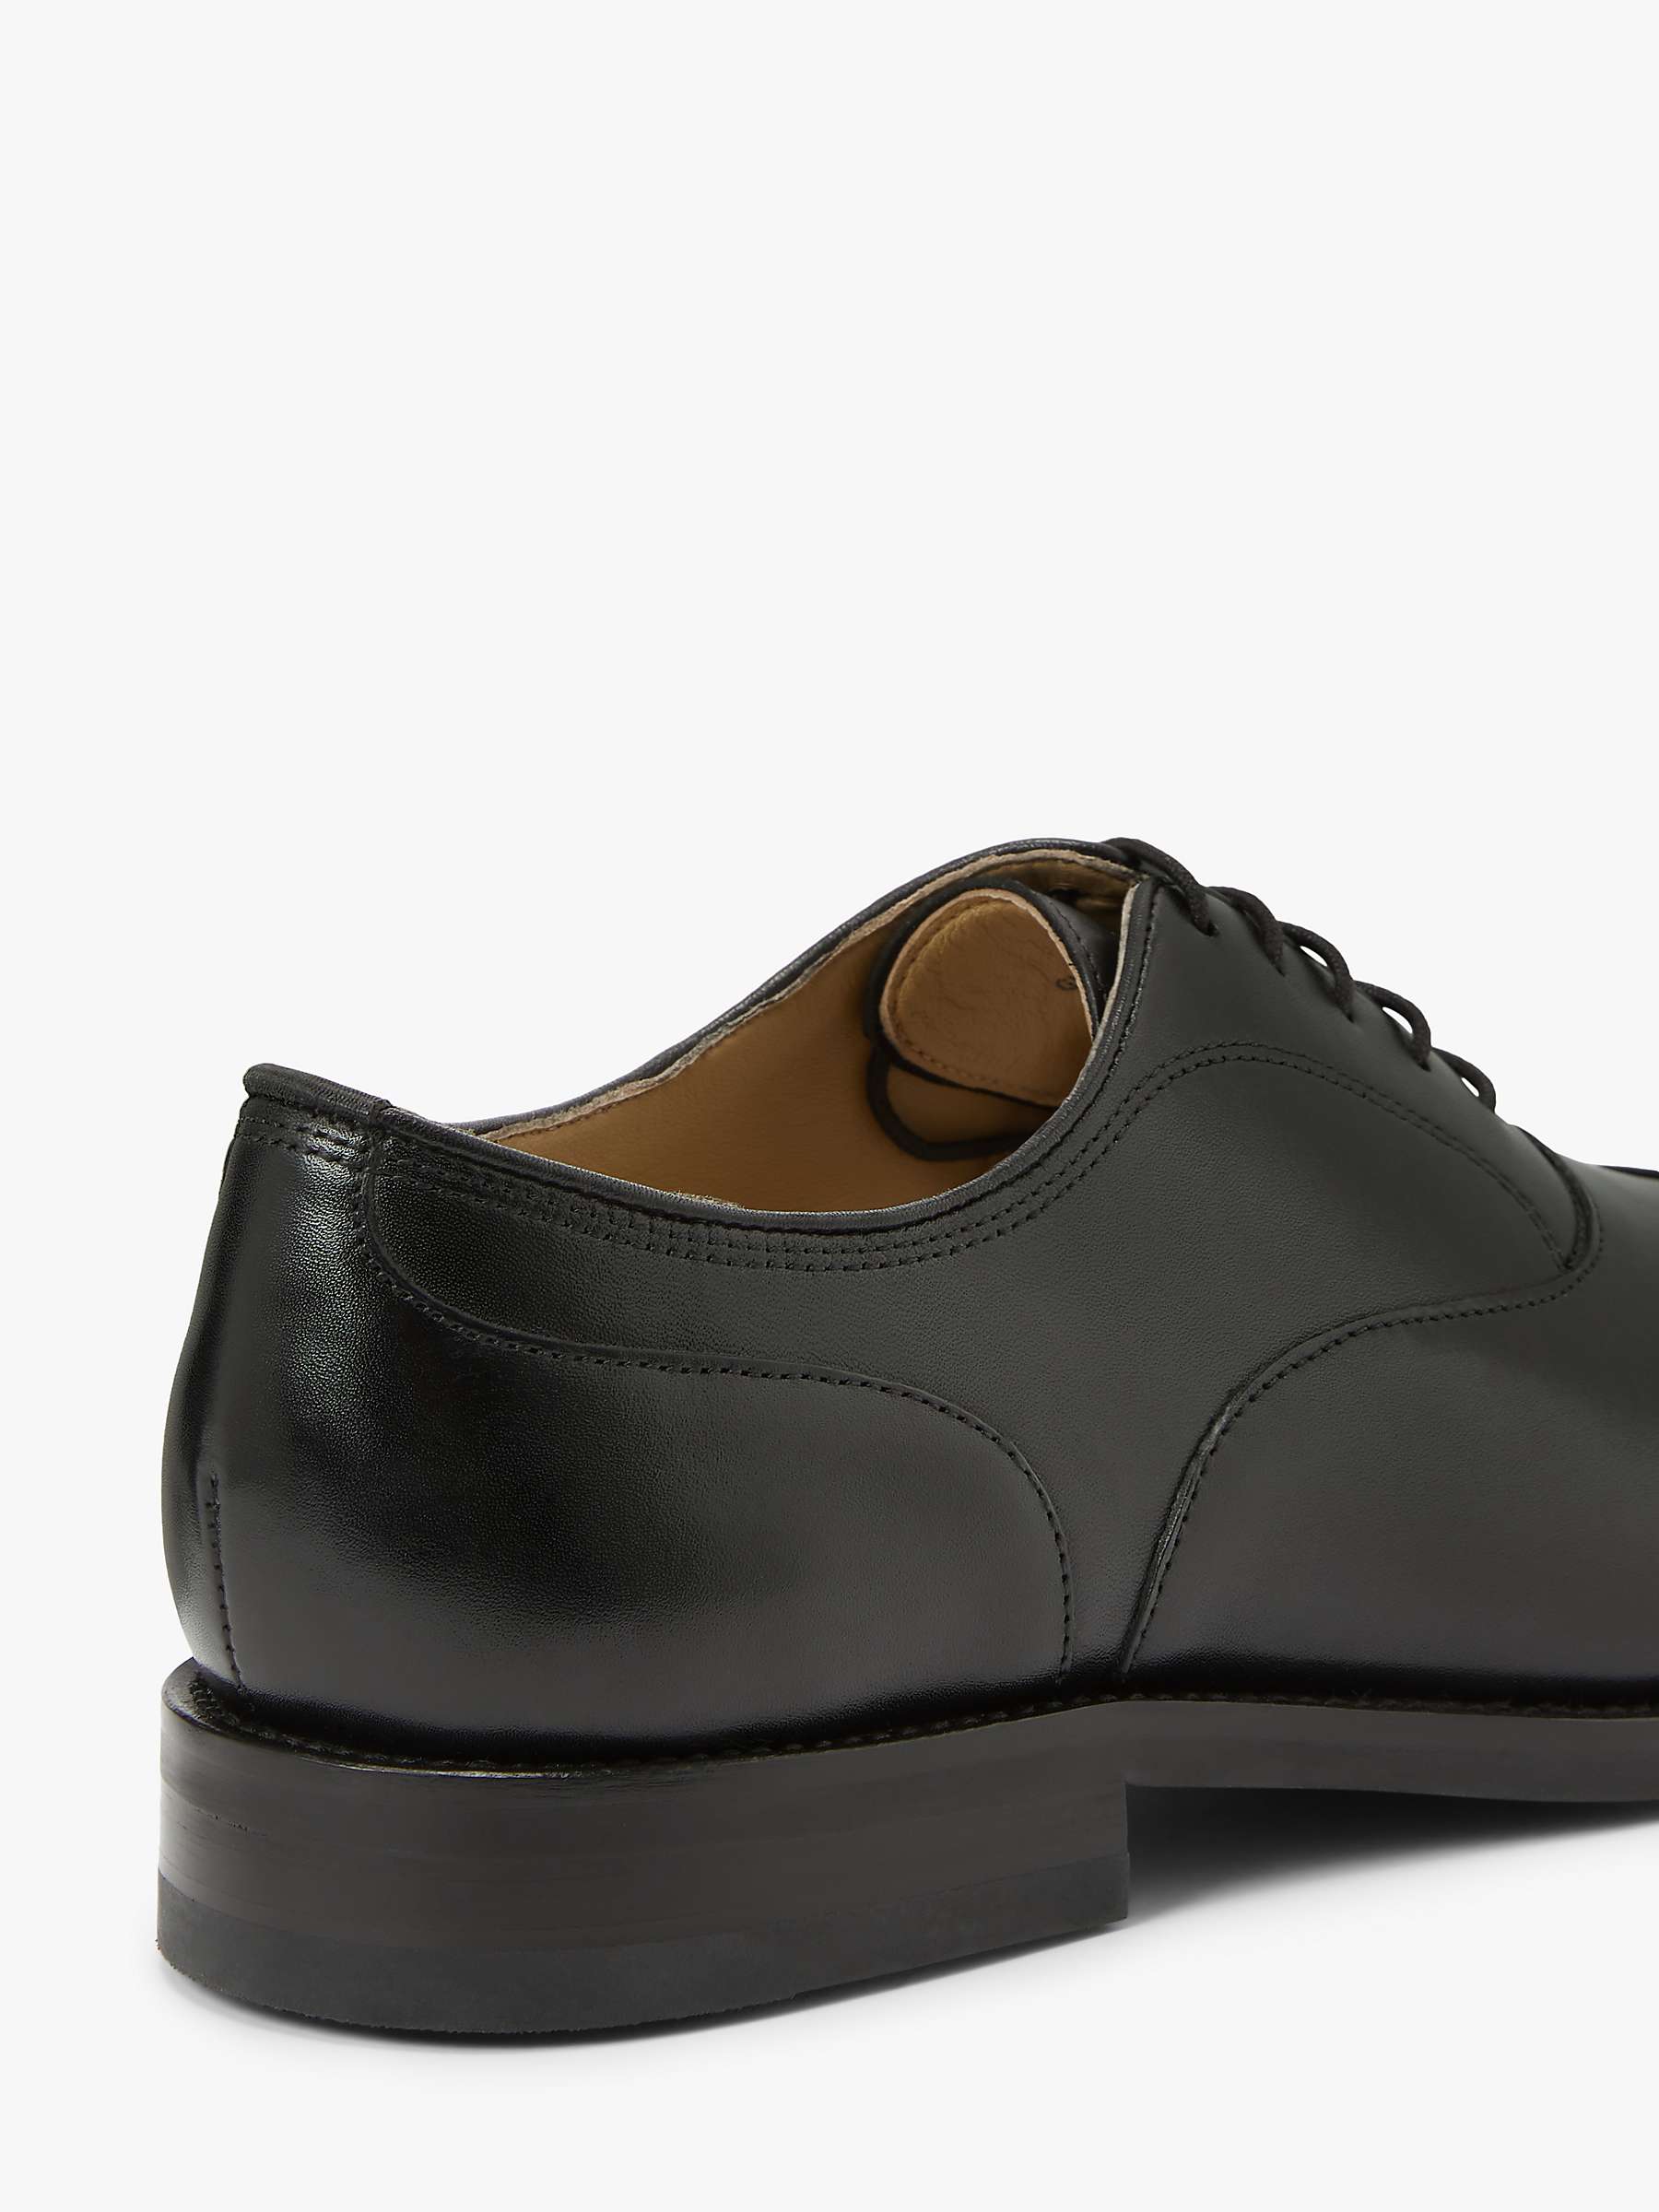 Buy John Lewis Glympton Leather Oxford Shoes Online at johnlewis.com